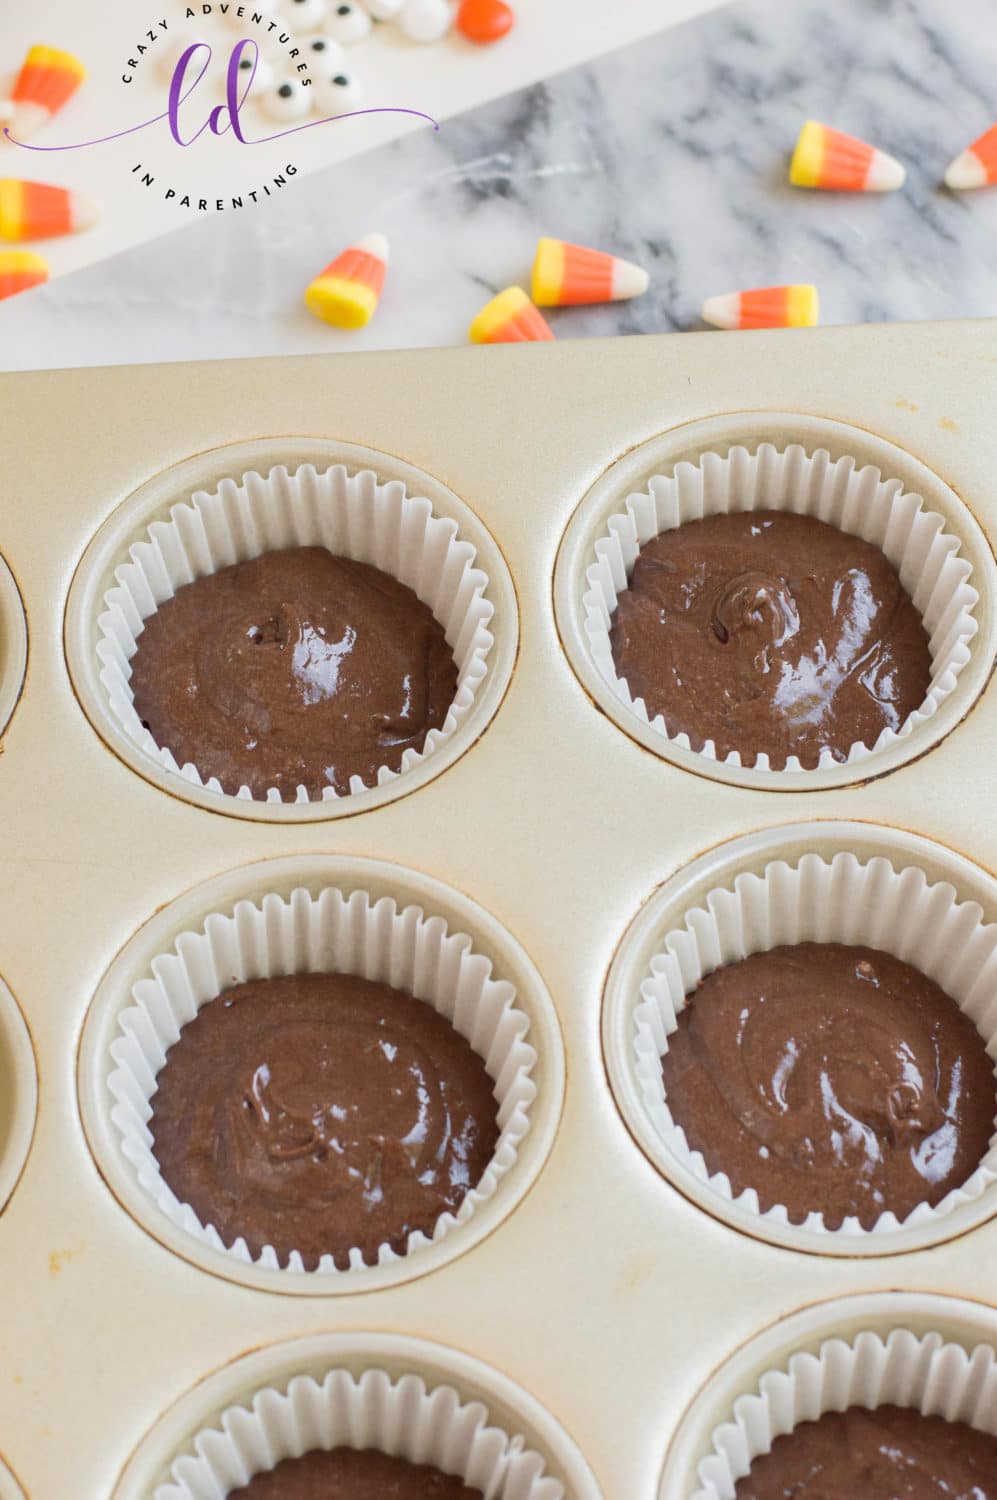 Chocolate Batter in Cupcake Pan to Make Turkey Cupcakes for Thanksgiving